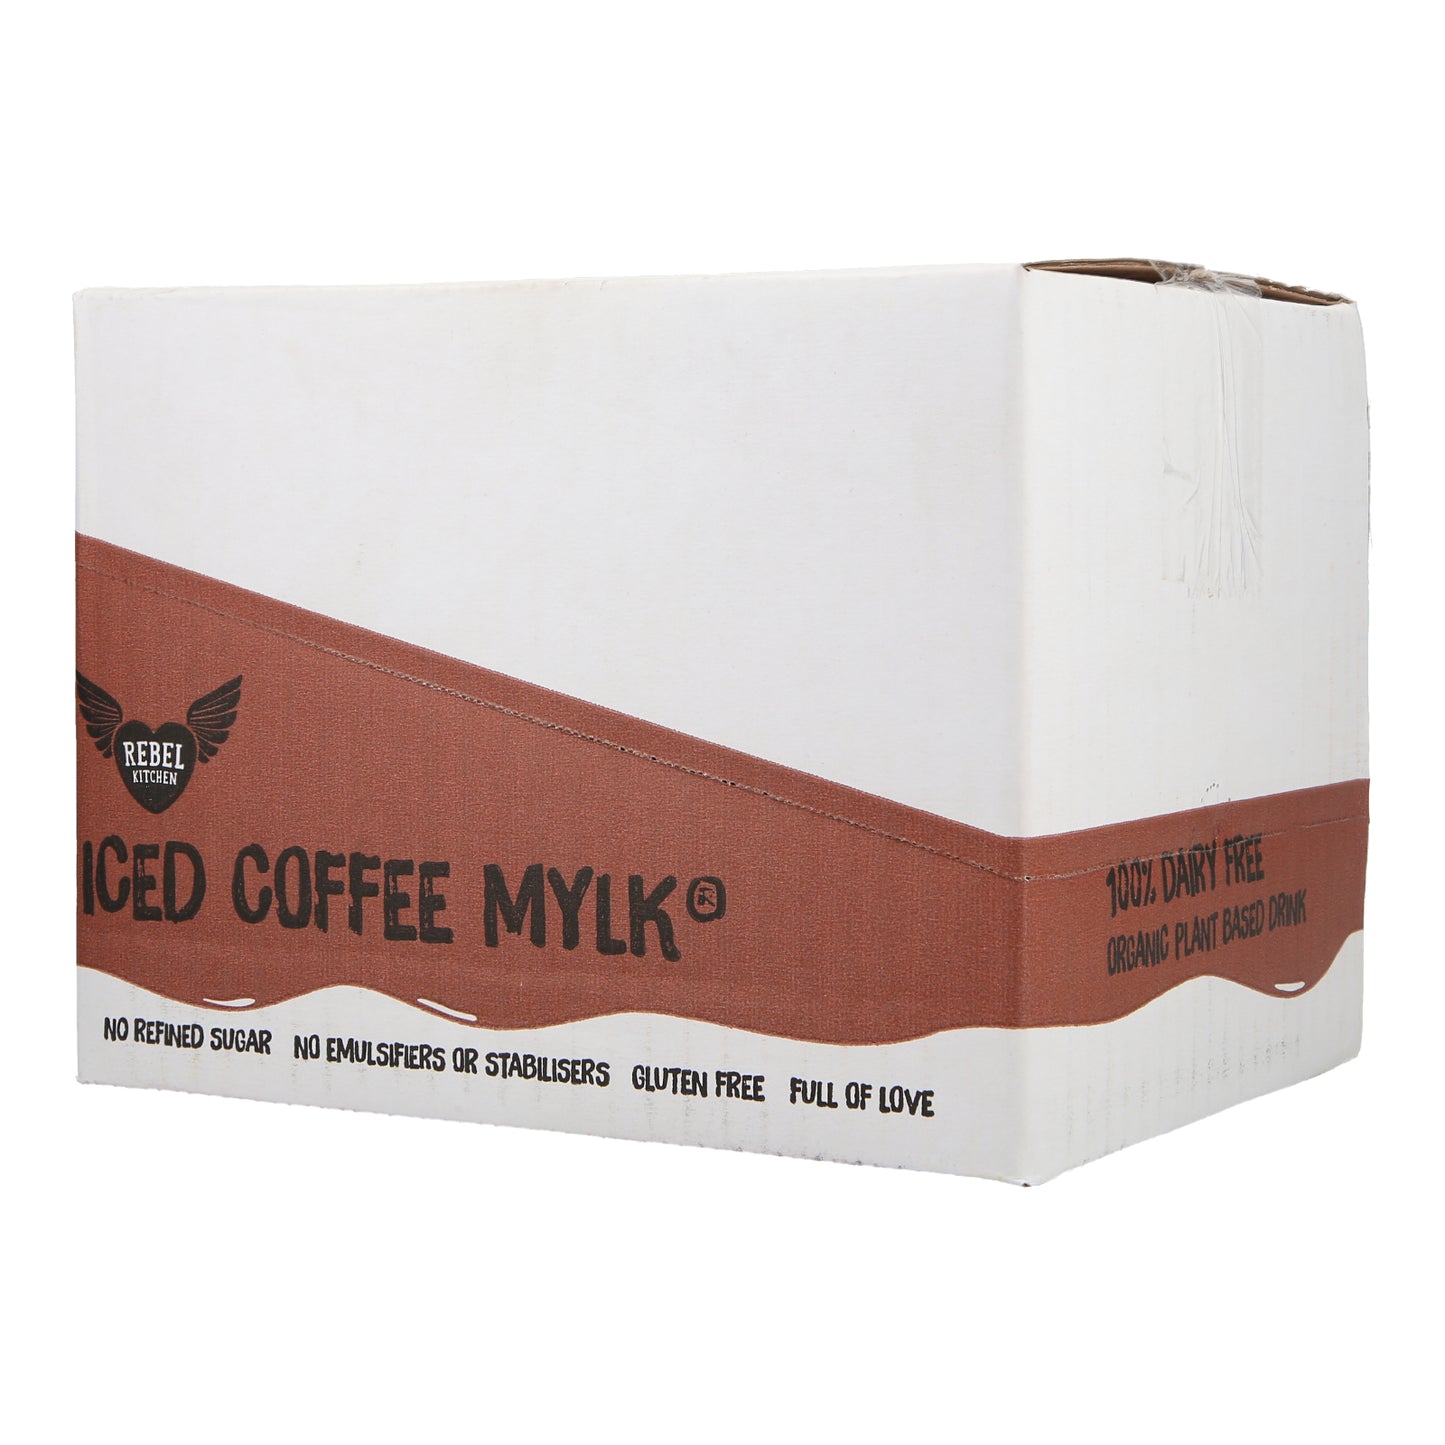 Iced Coffee Mylk